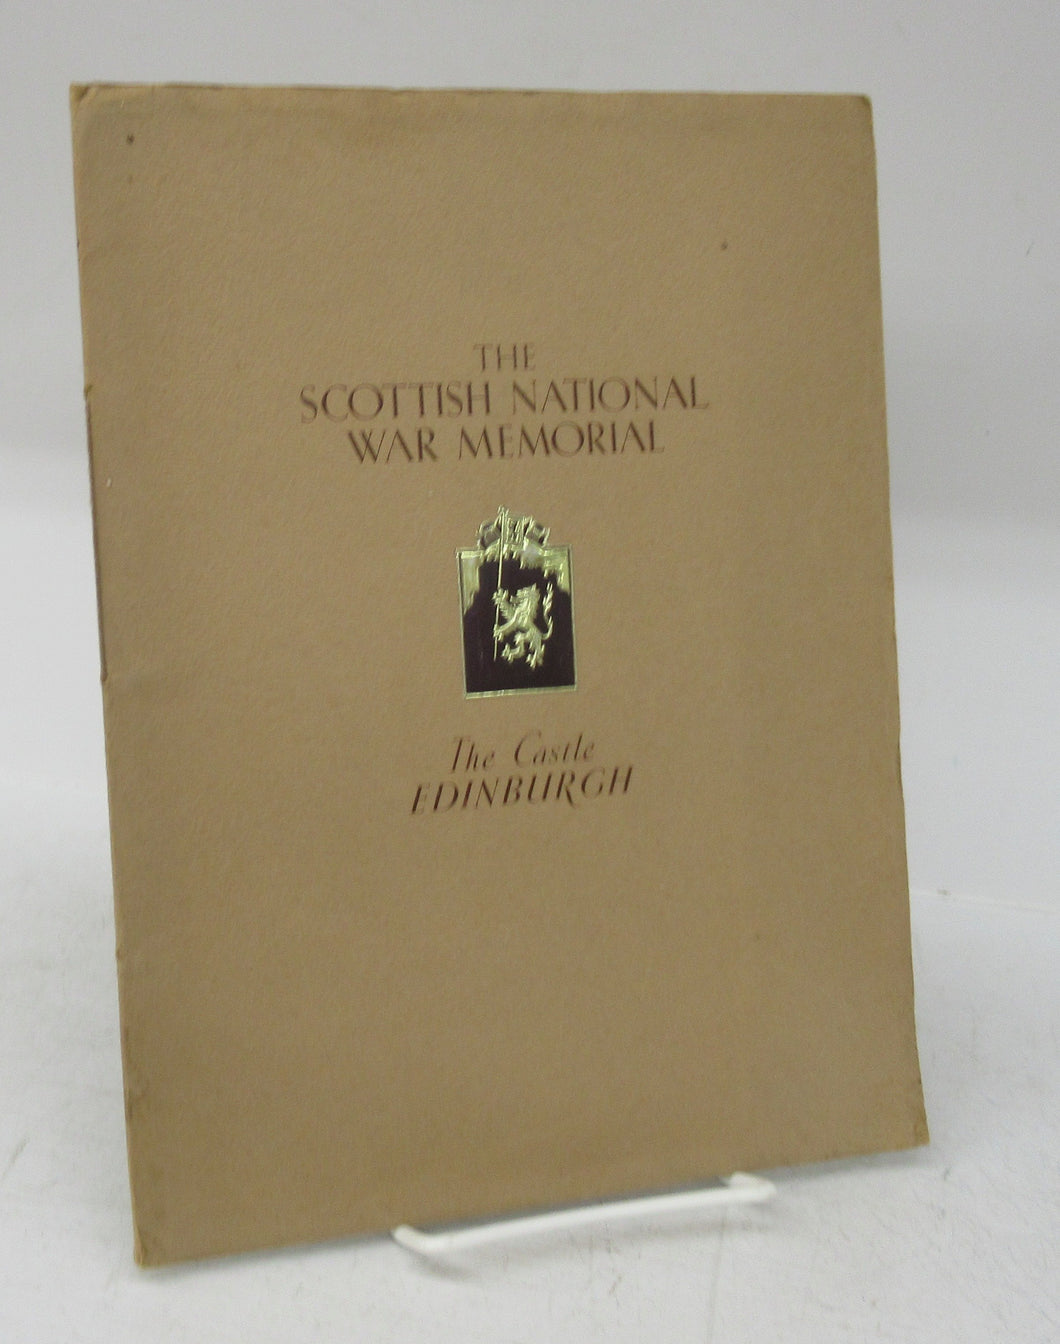 The Scottish National War Memorial at the Castle, Edinburgh